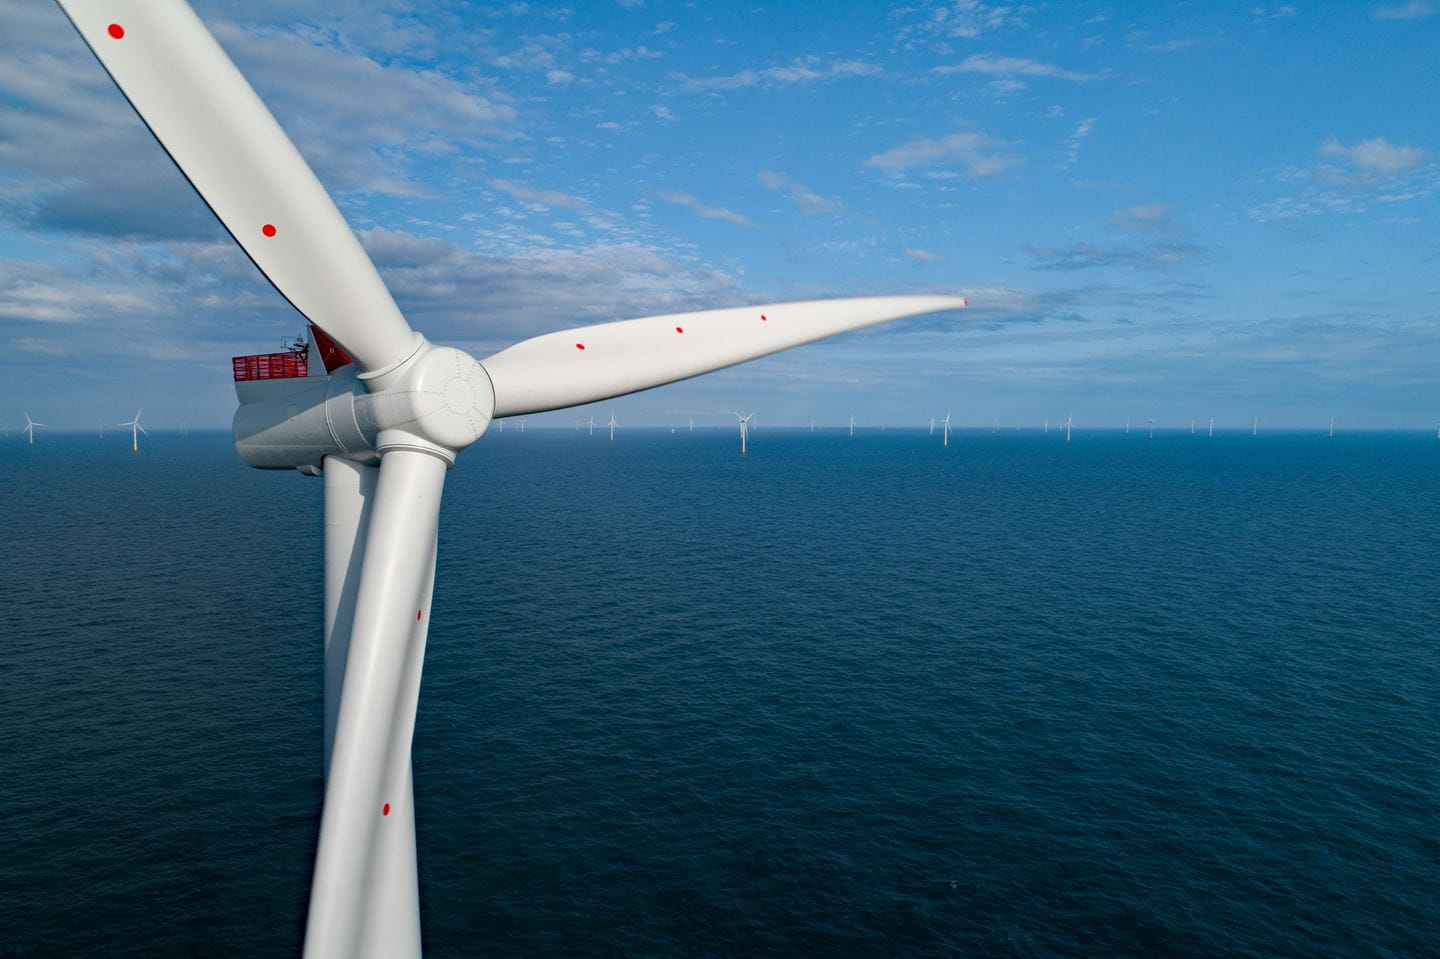 Hornsea One Offshore Wind Farm turbine